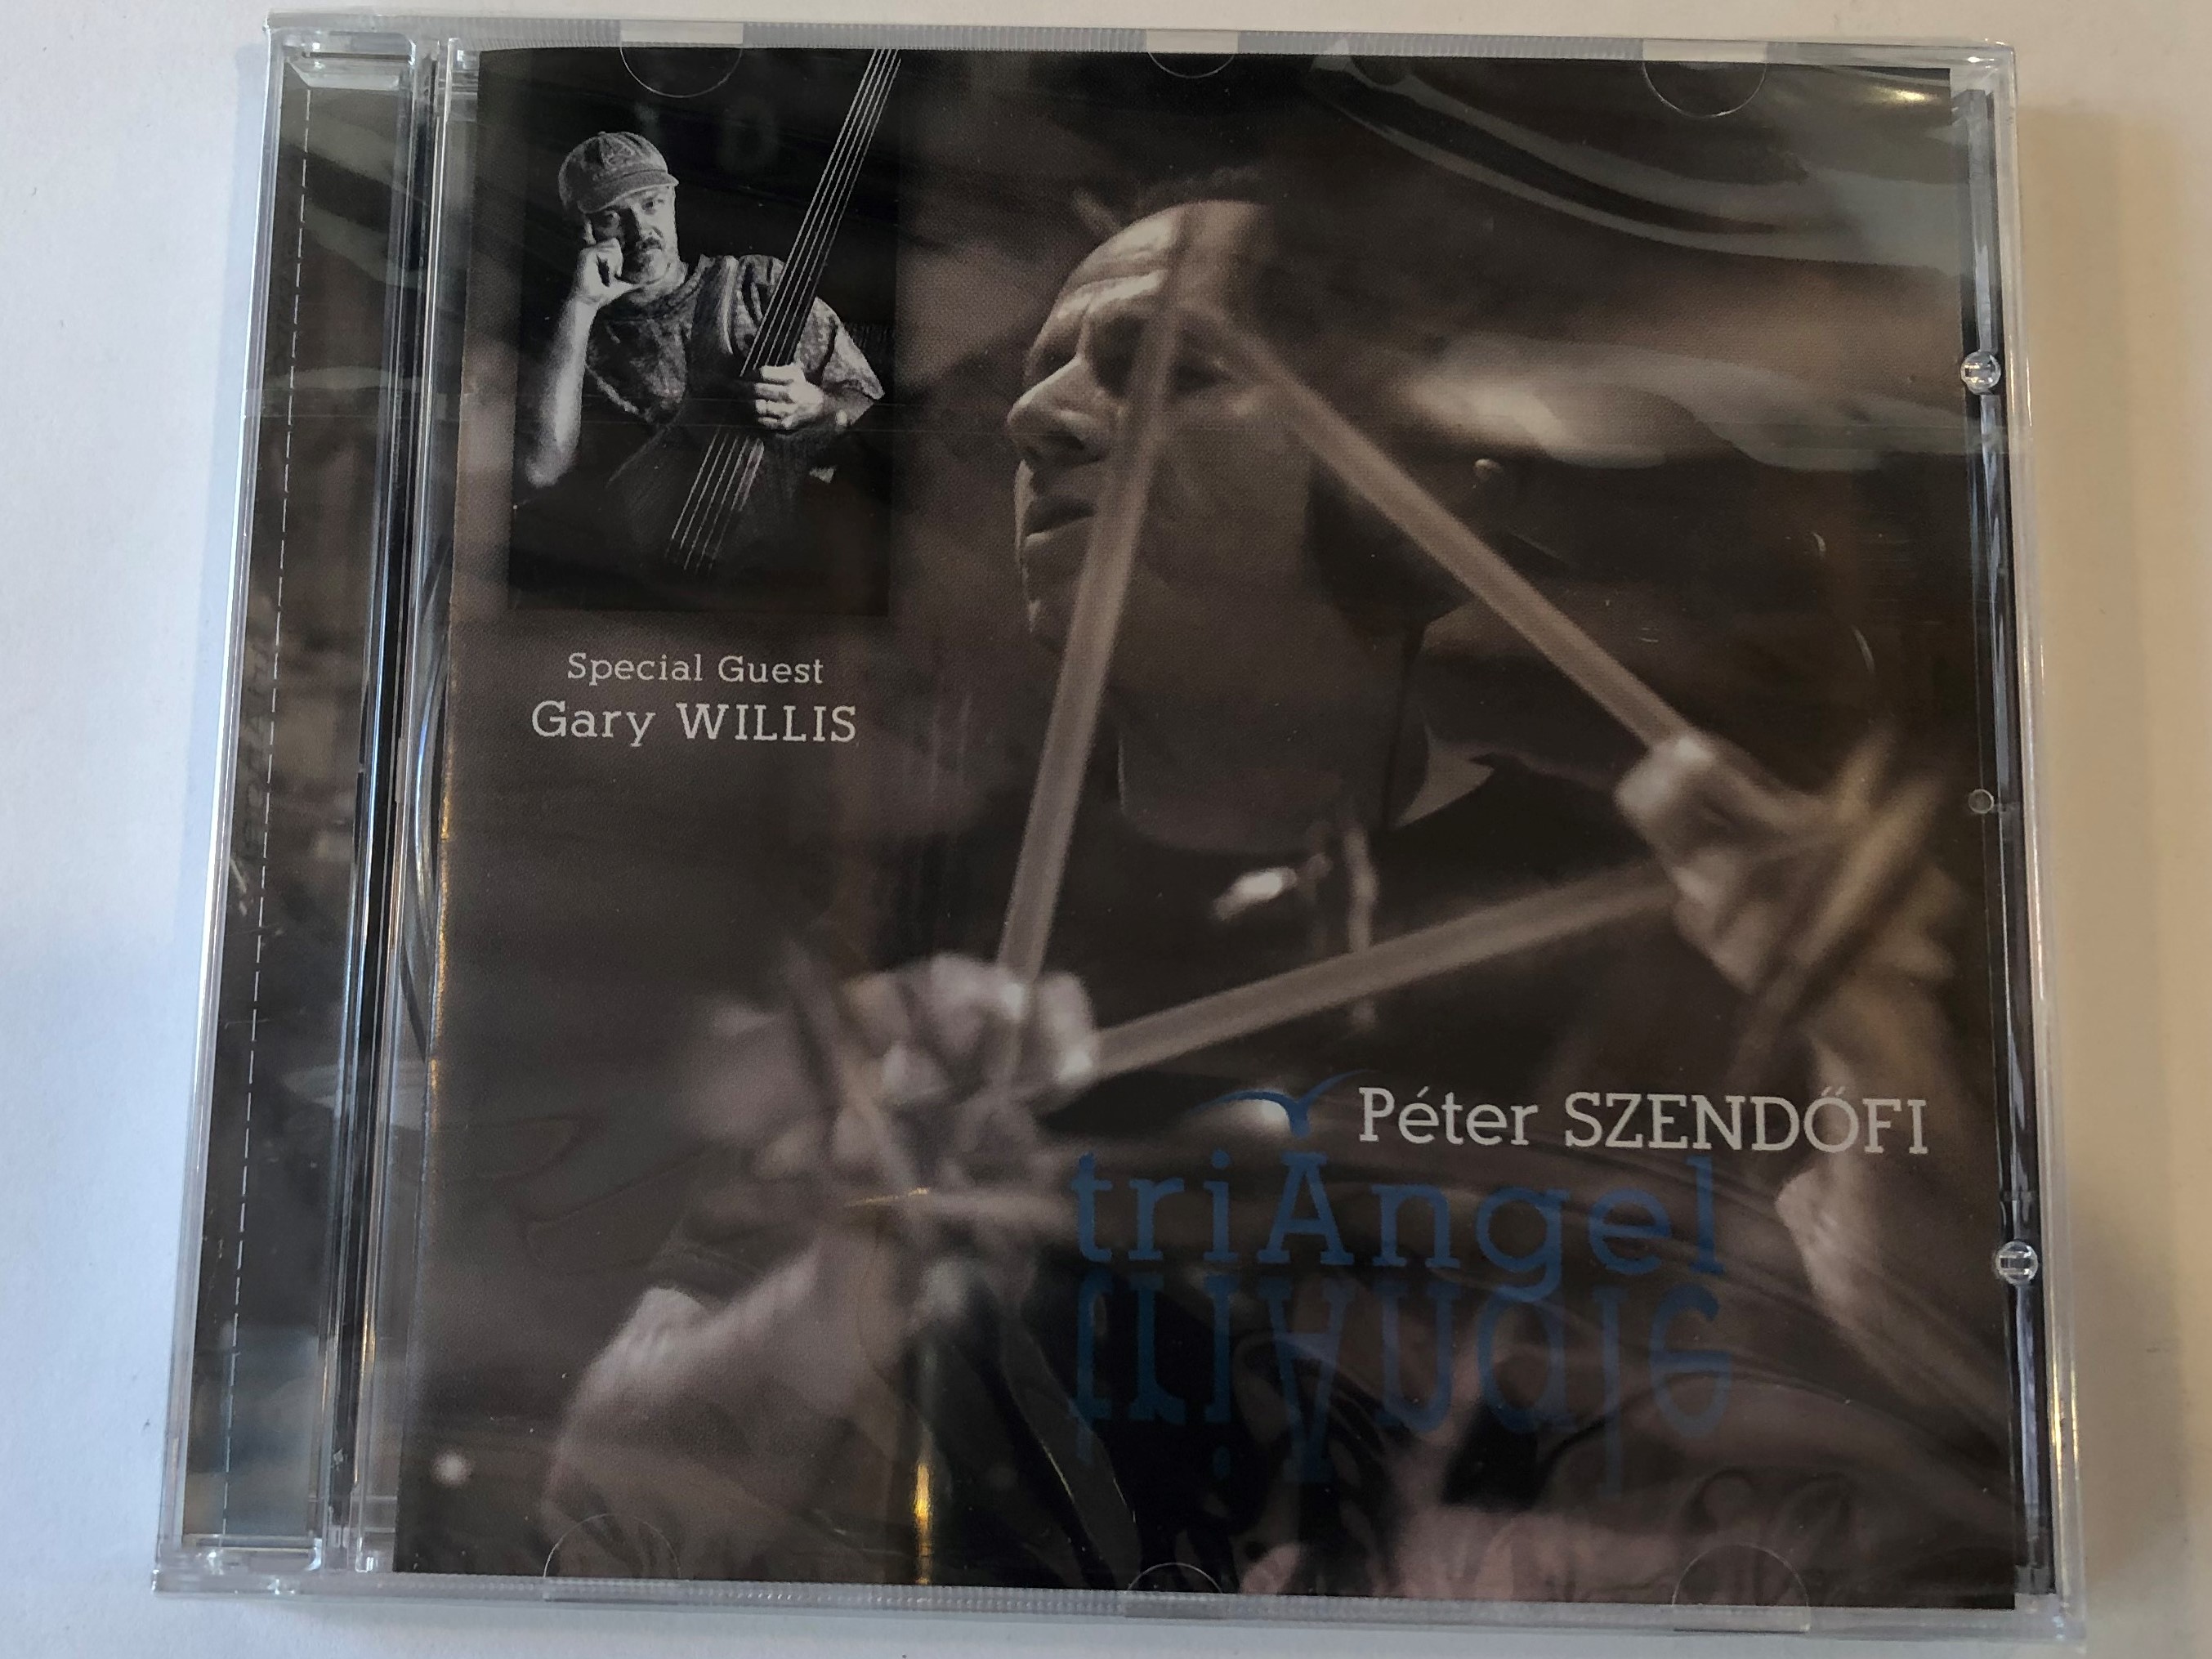 p-ter-szend-fi-triangel-special-guest-gary-willis-tom-tom-records-audio-cd-2005-ttcd-70-1-.jpg